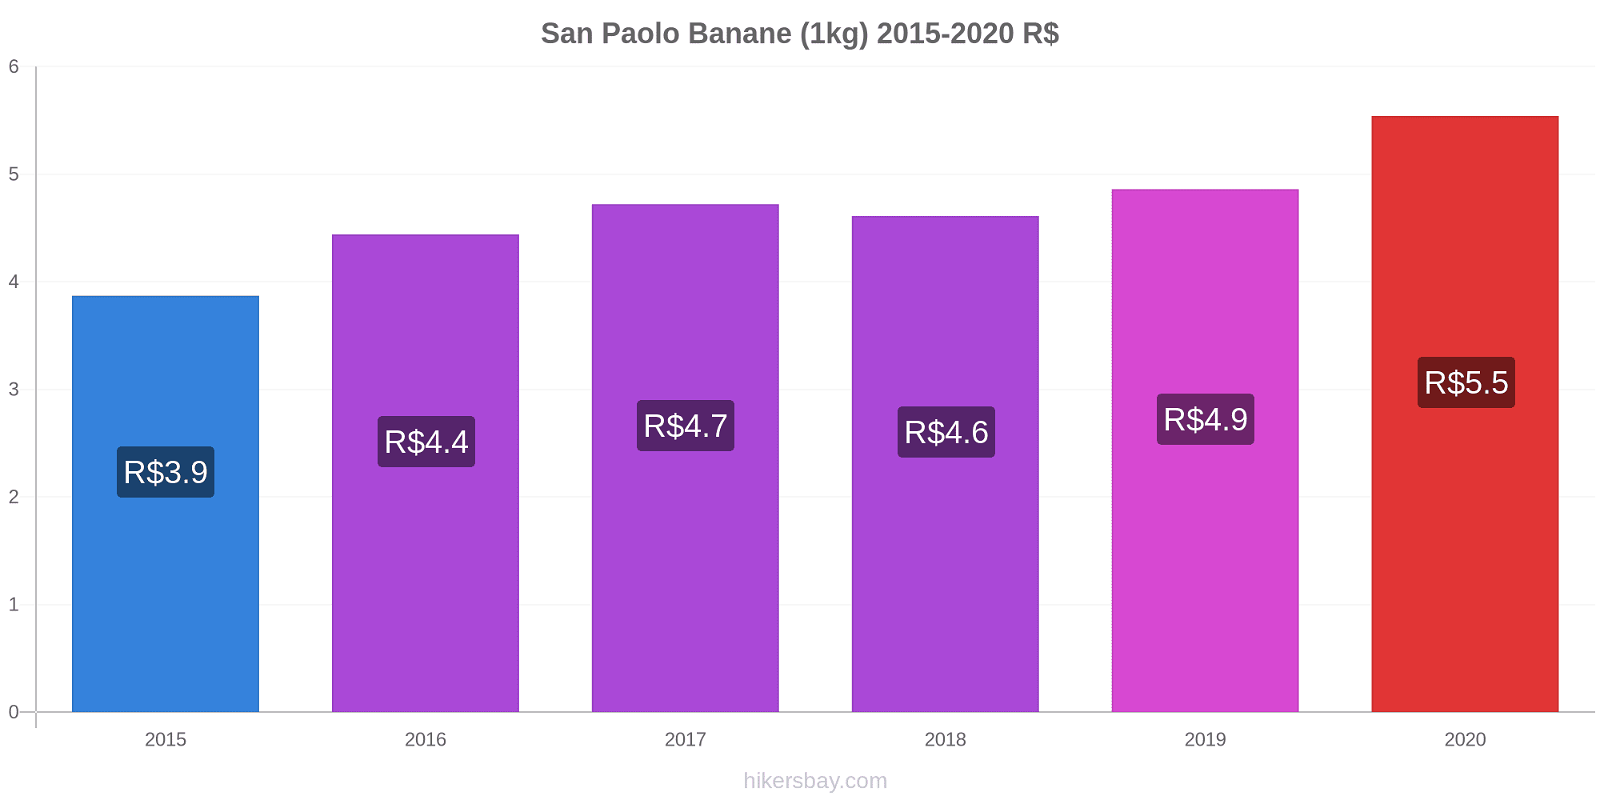 San Paolo variazioni di prezzo Banana (1kg) hikersbay.com